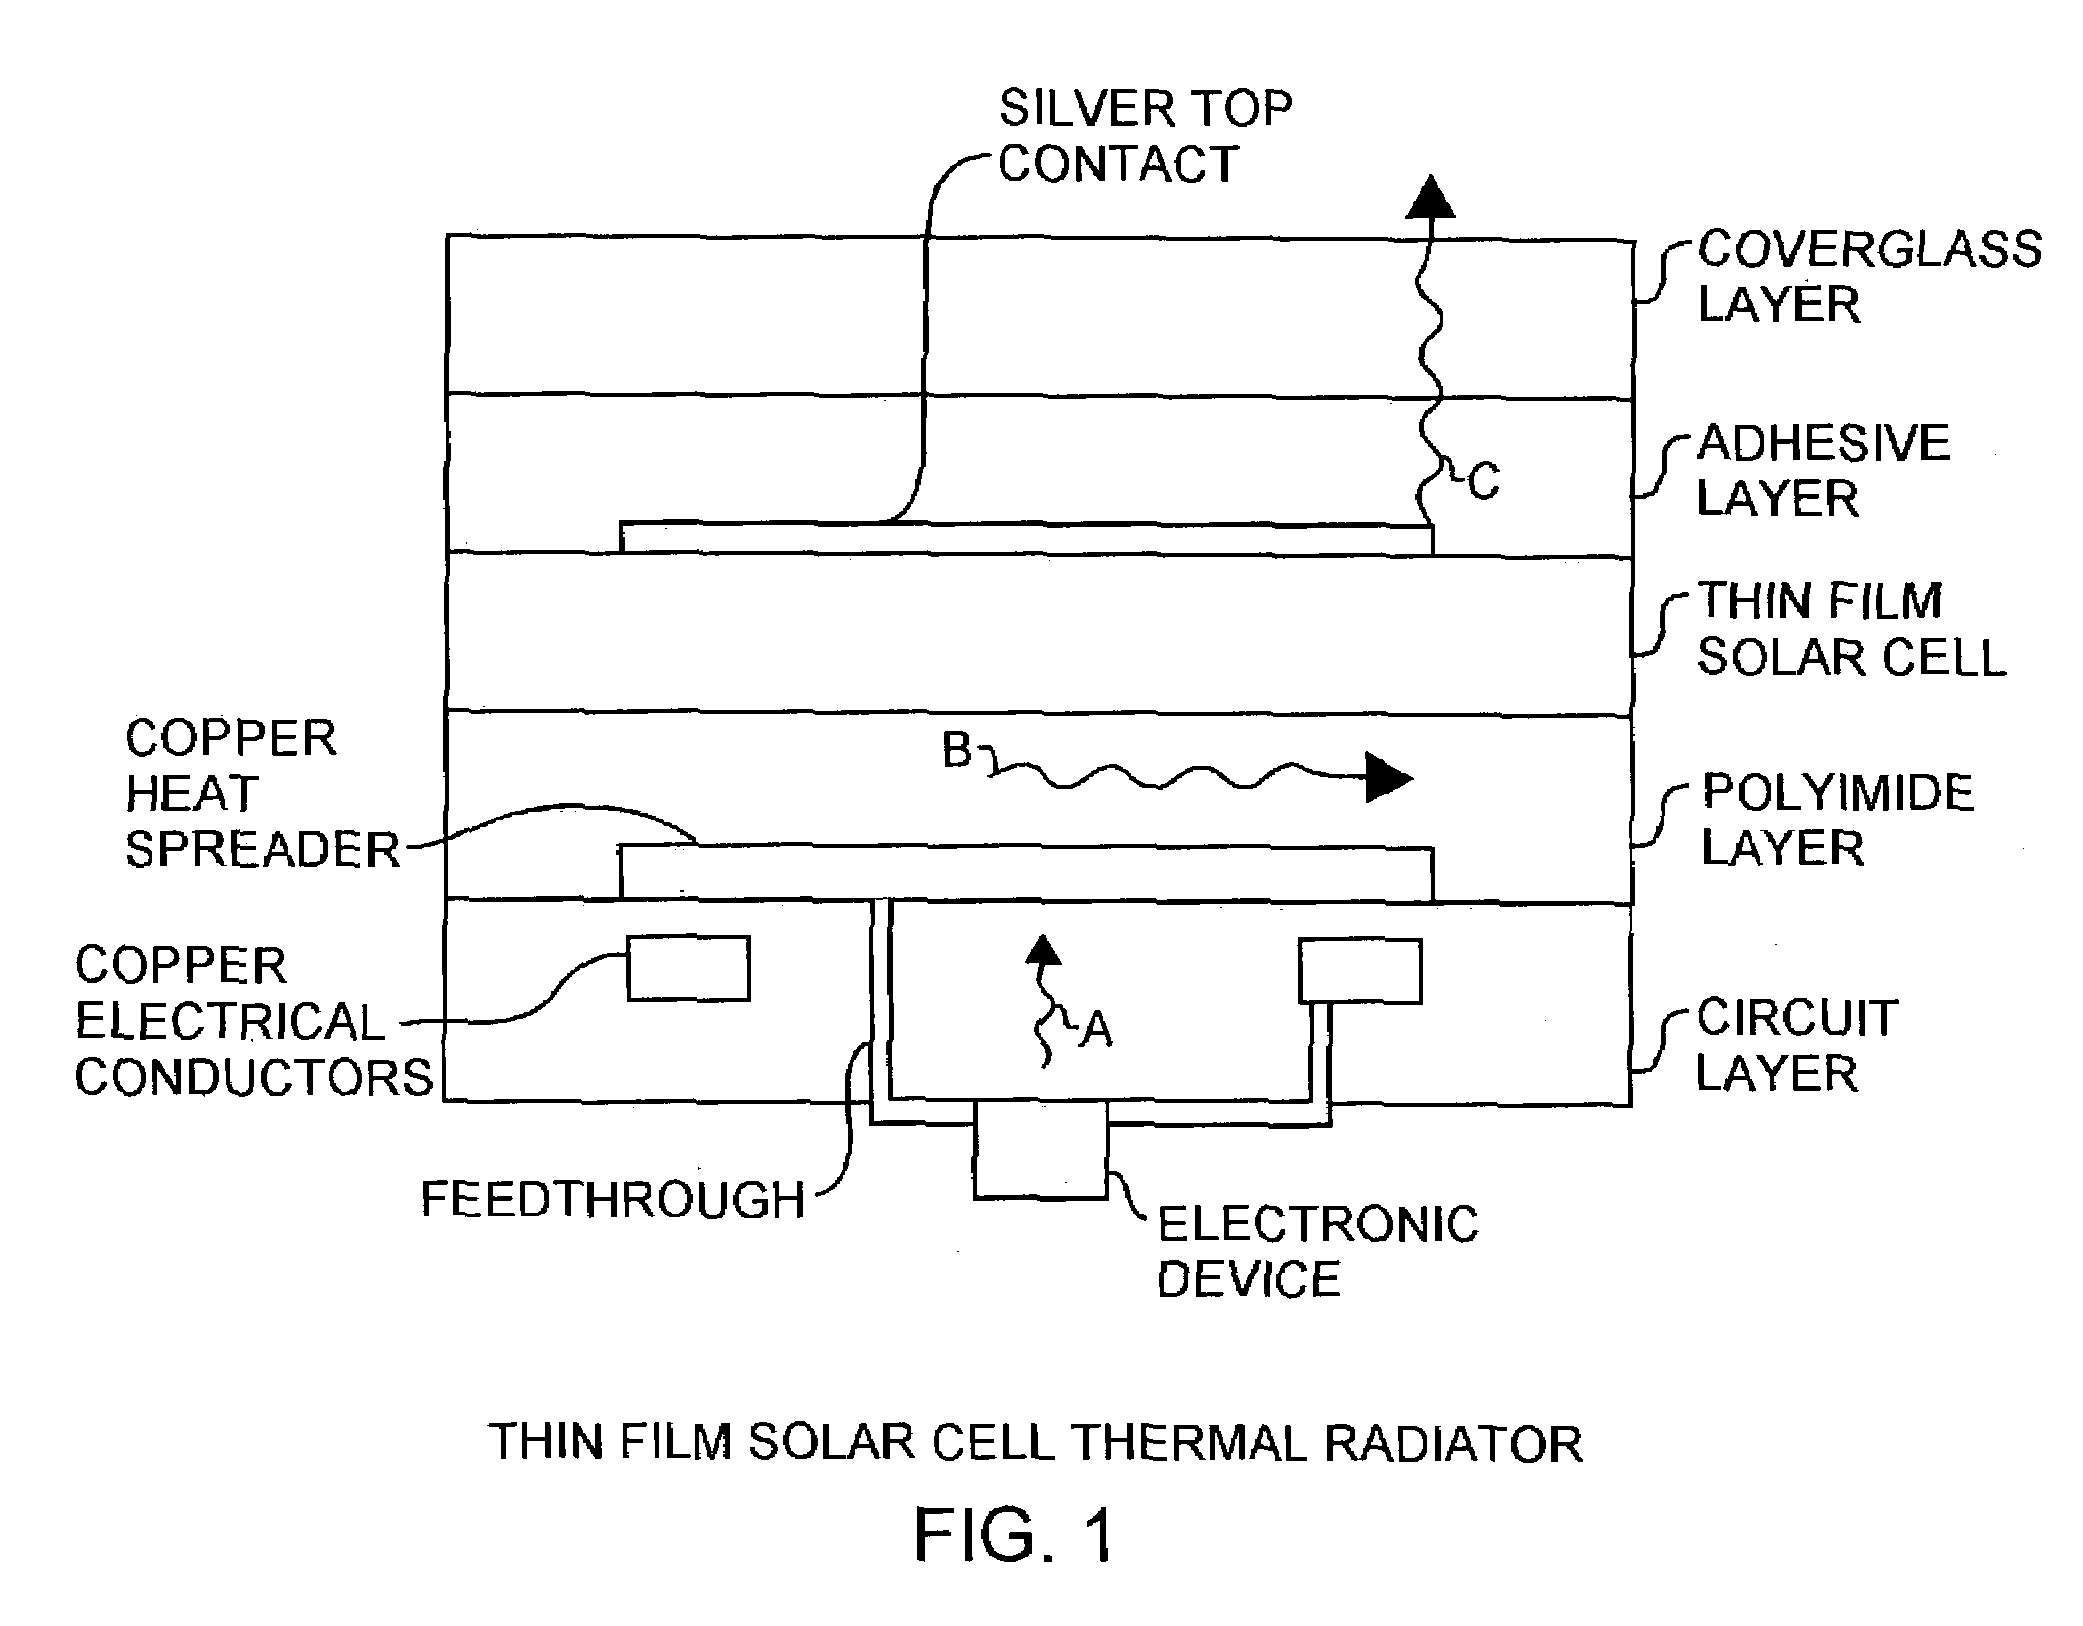 Thin film solar cell thermal radiator